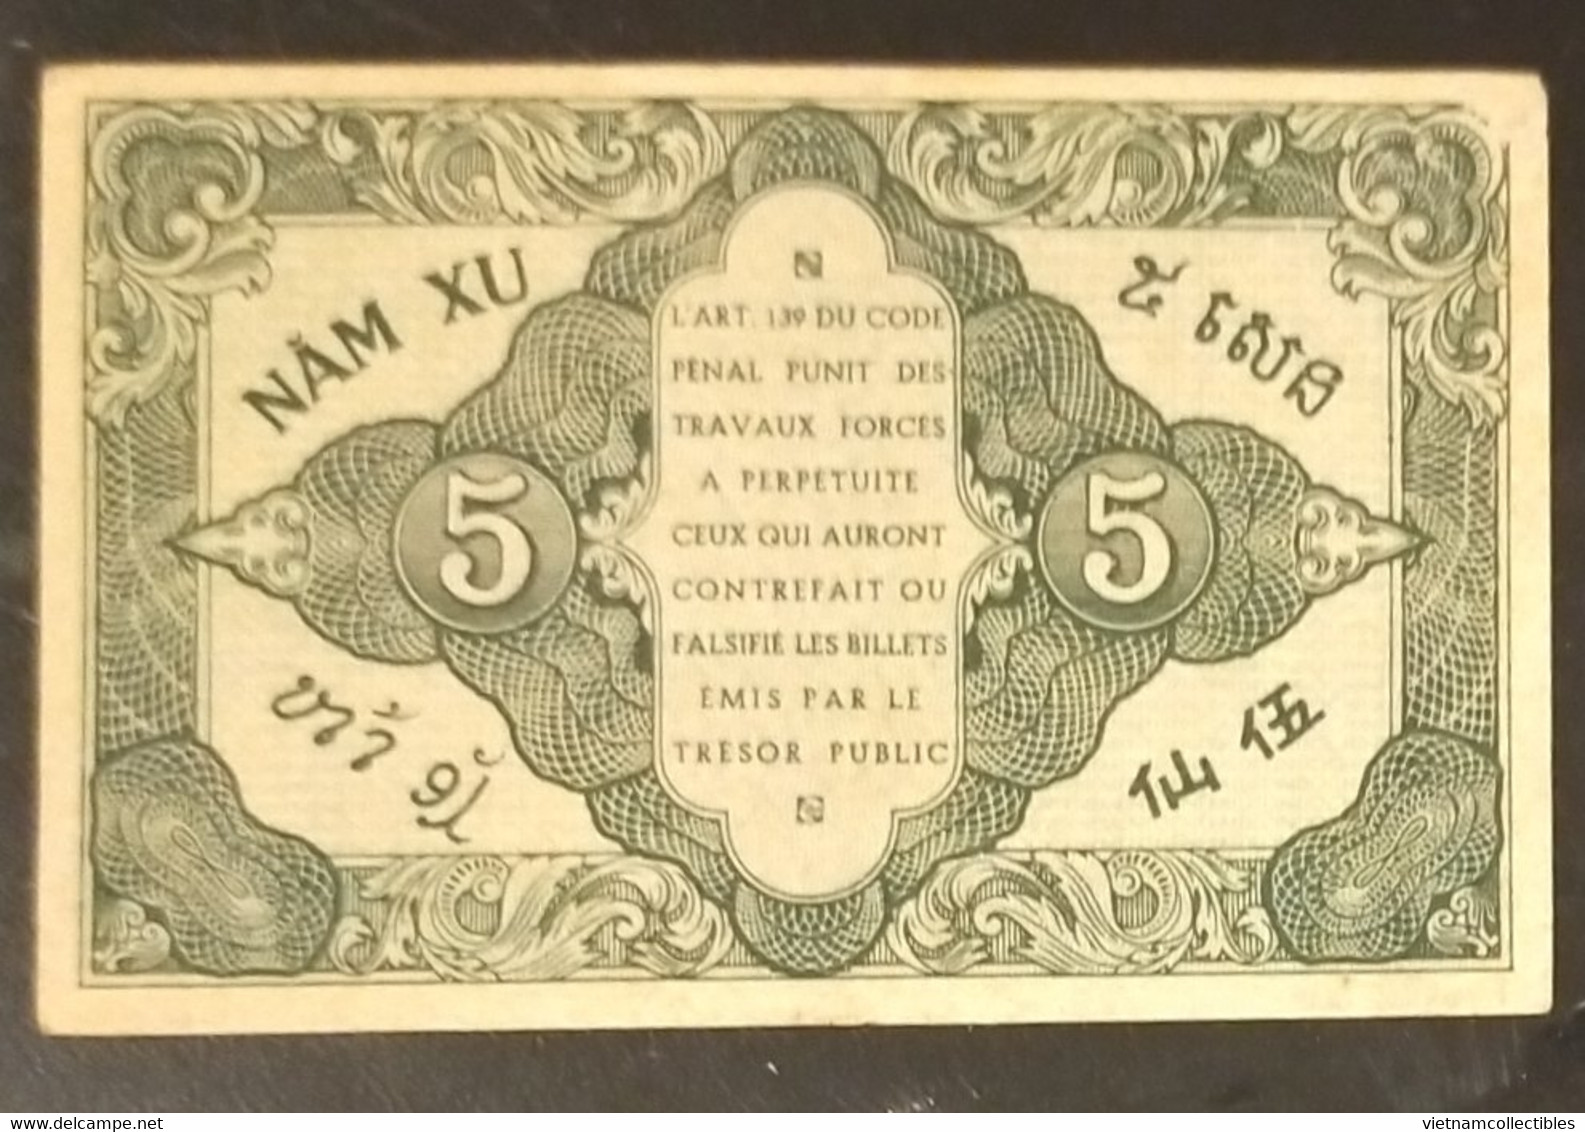 French Indochine Indochina Vietnam Viet Nam Laos Cambodia 5 Cents AU Banknote Note Billet 1942 - Pick # 88b / 2 Photos - Indochine